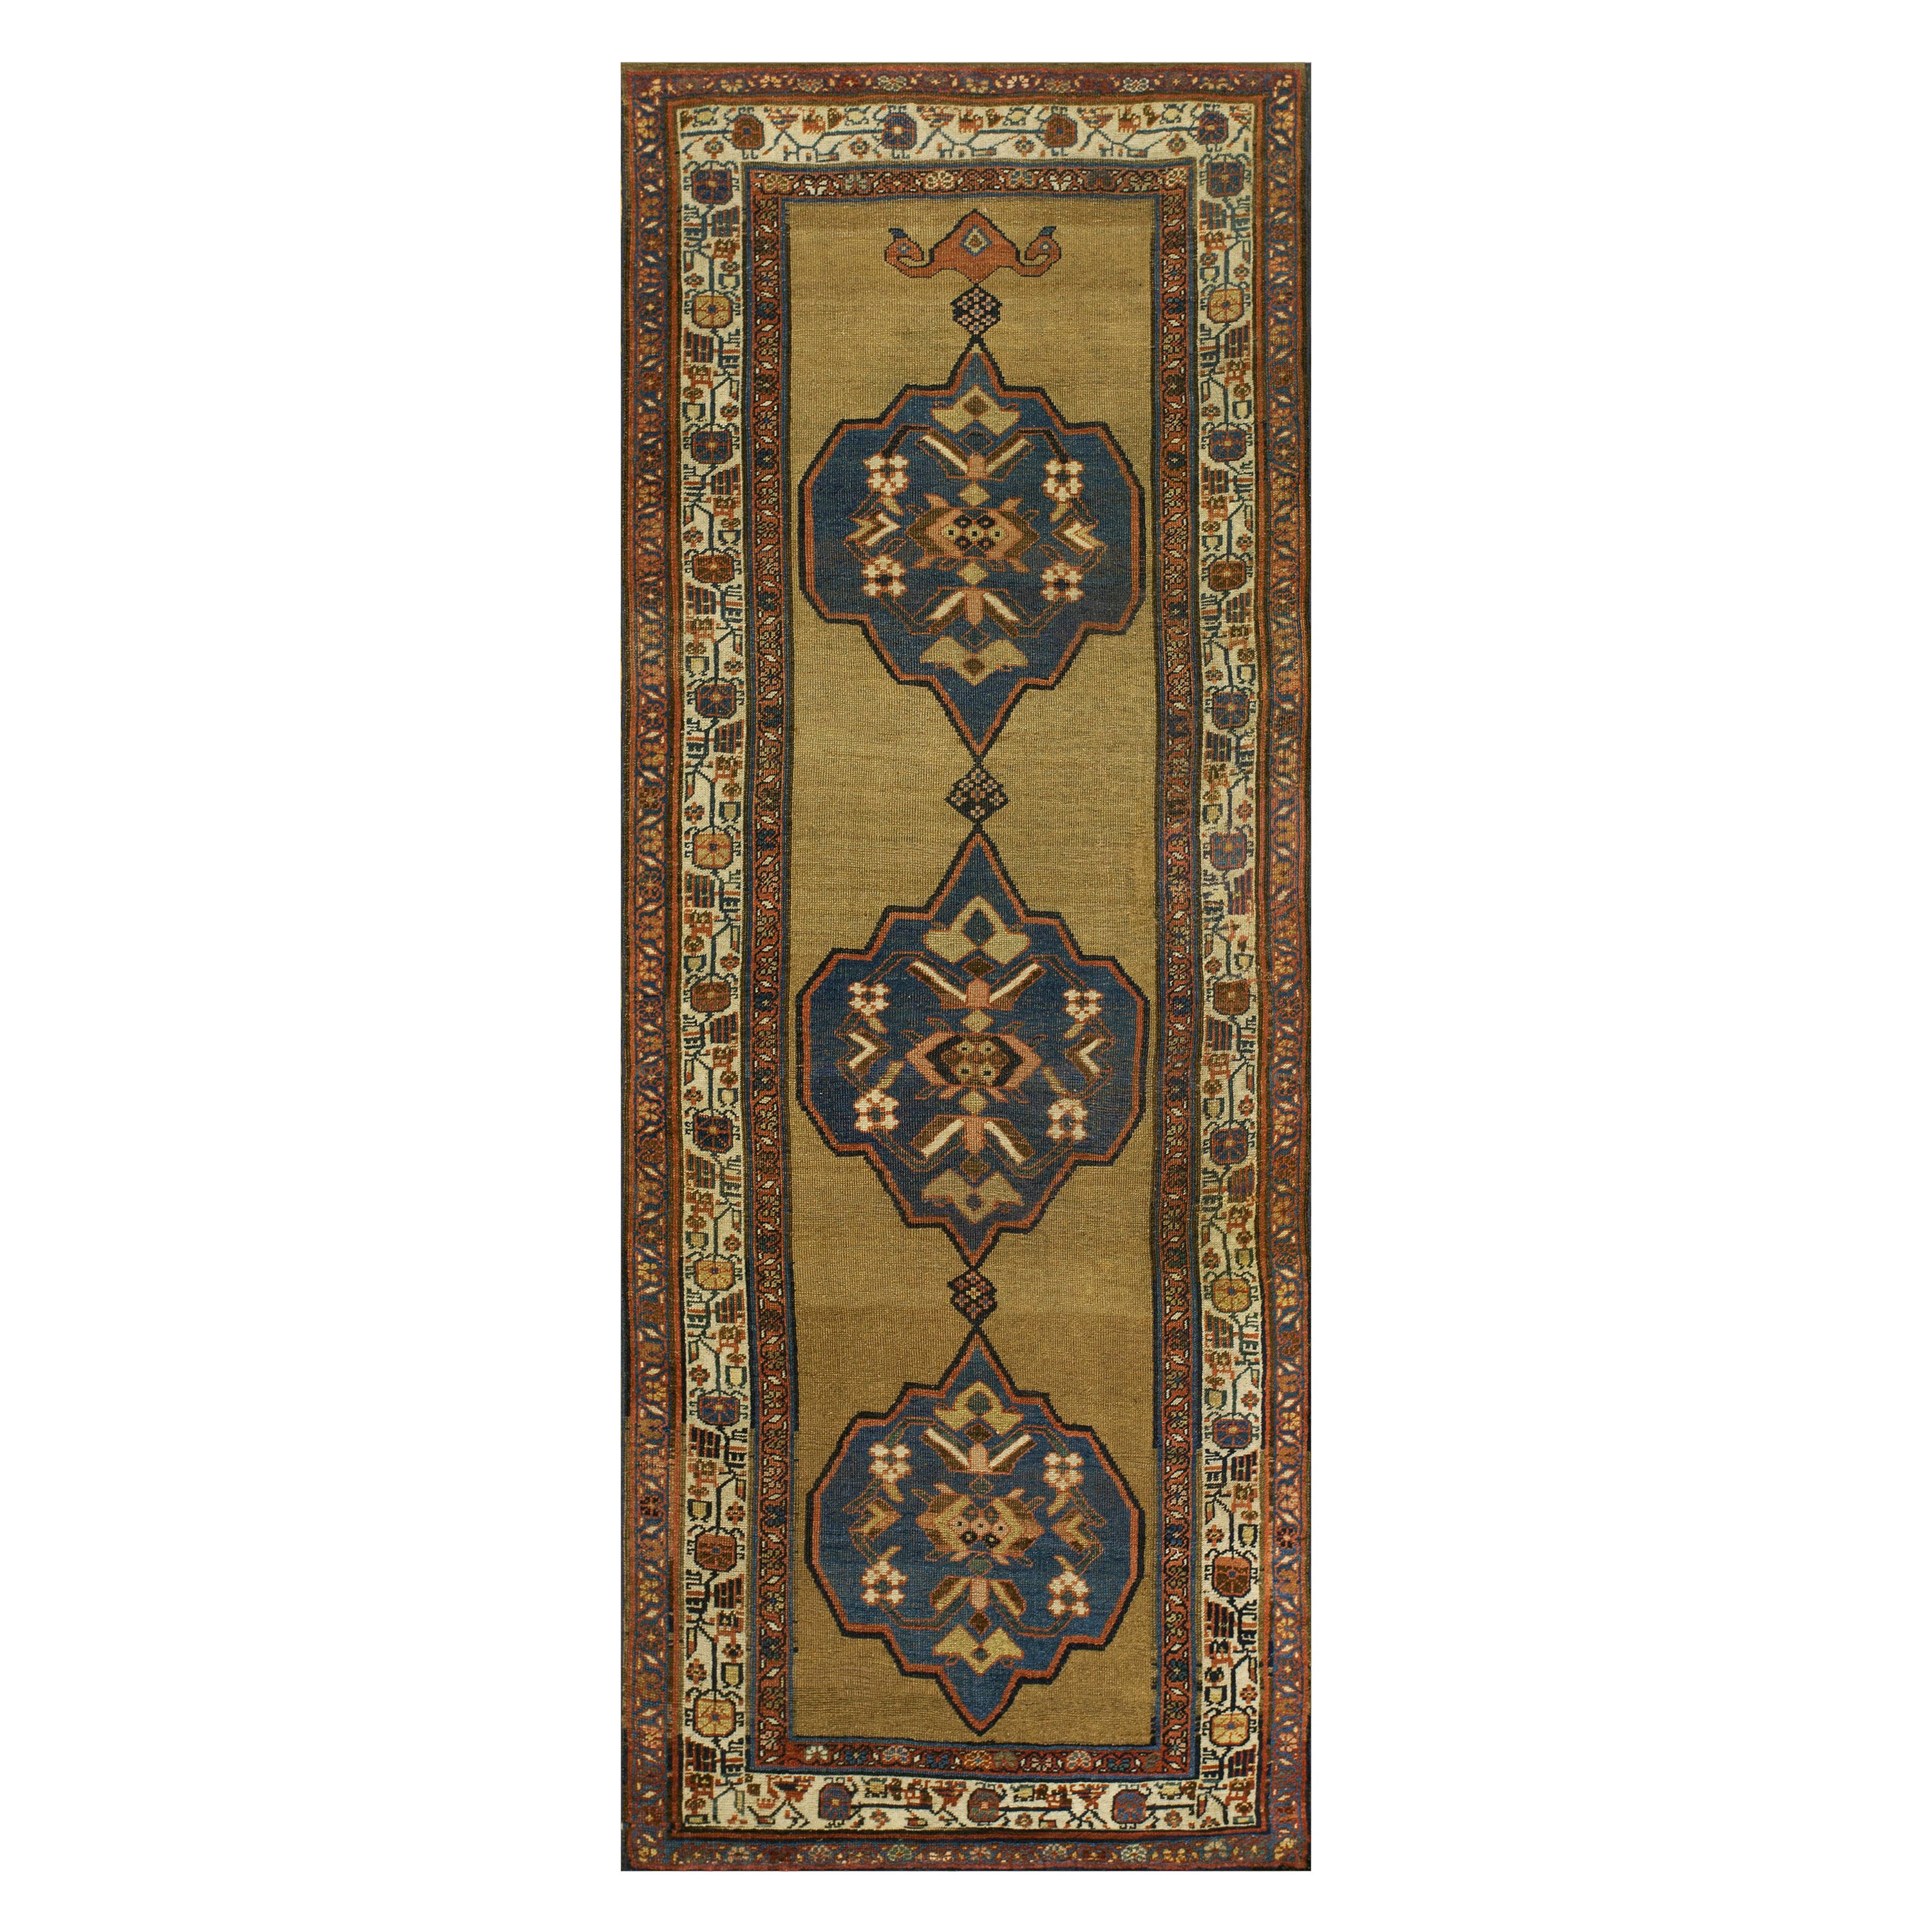 Late 19th Century Persian Bijar Carpet ( 4' x 10' 4" - 122 x 315 cm ) For Sale